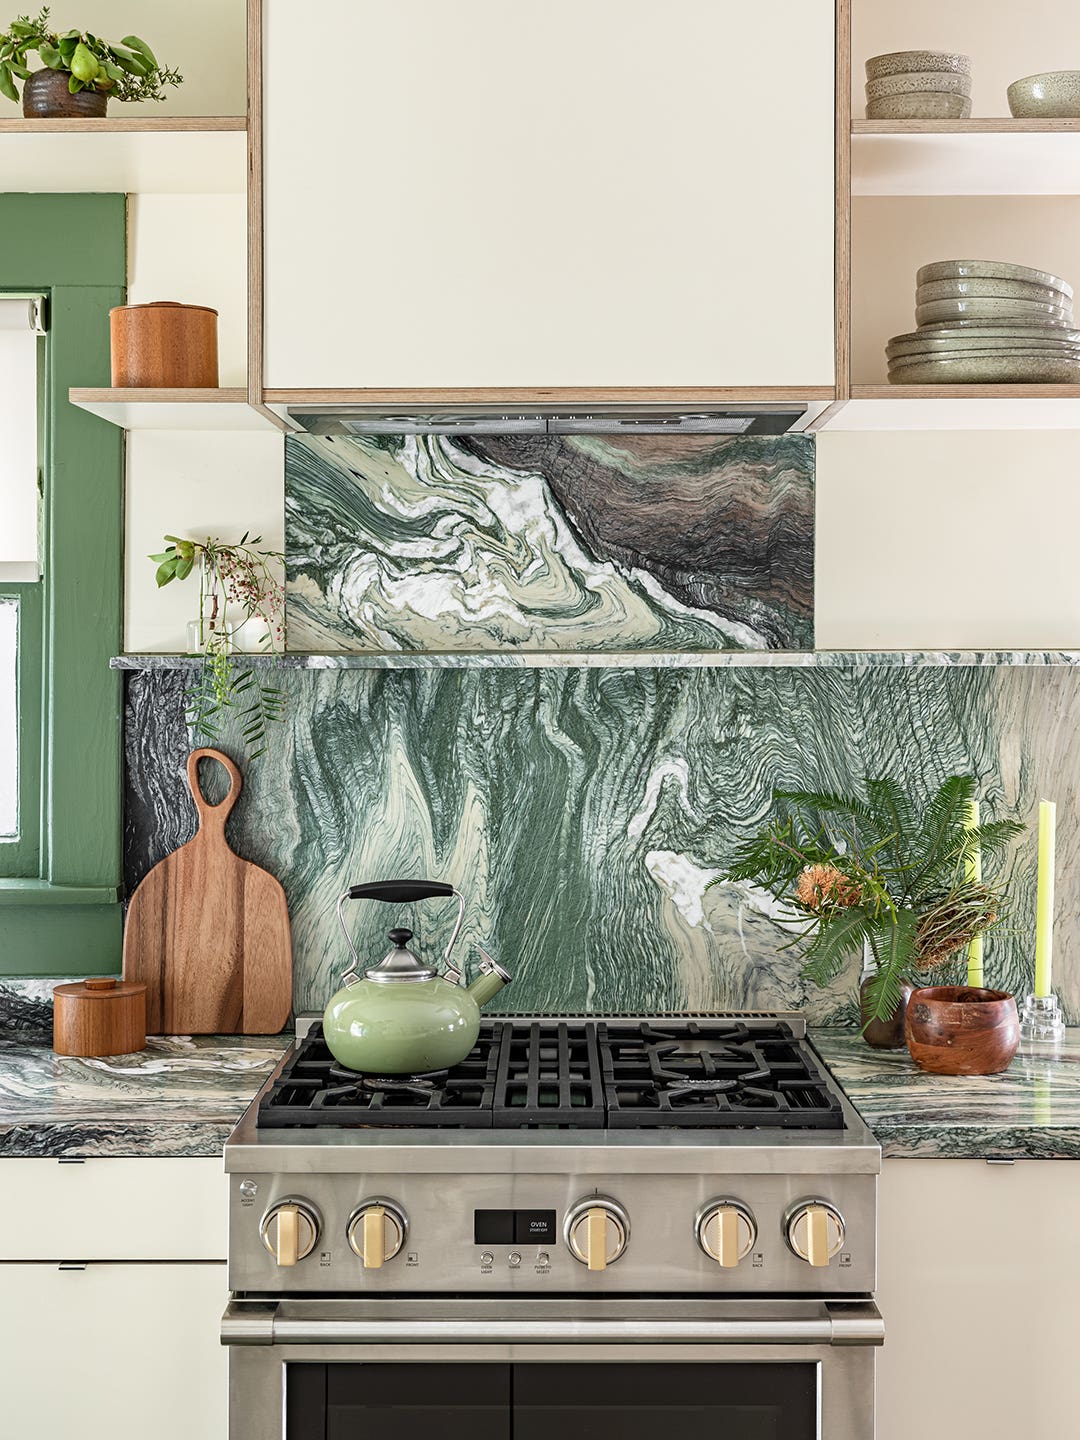 Kitchen stove with green marble backsplash